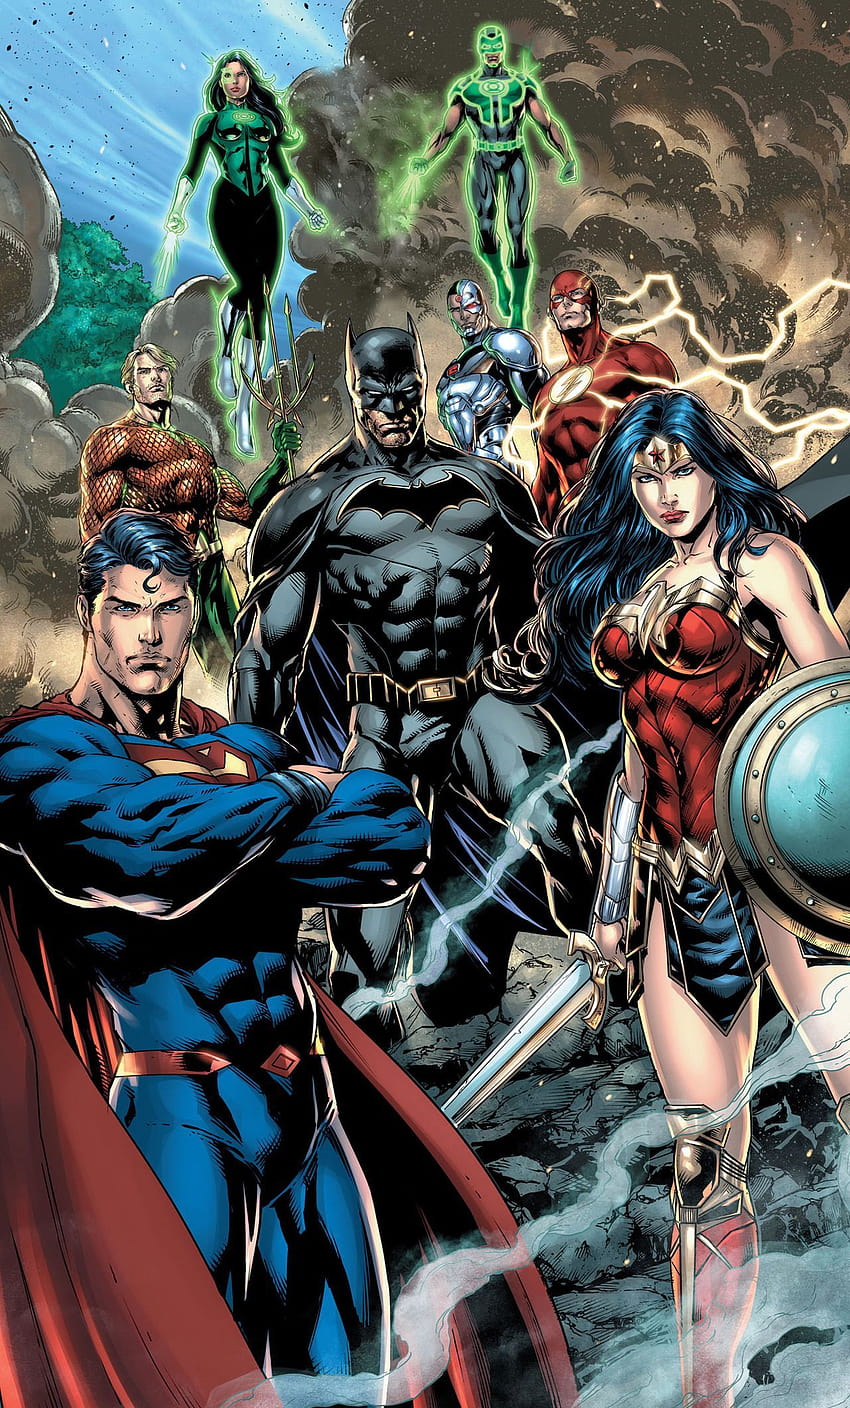 Wallpaper Batman Superhero dc Comics Art DC Universe Background   Download Free Image